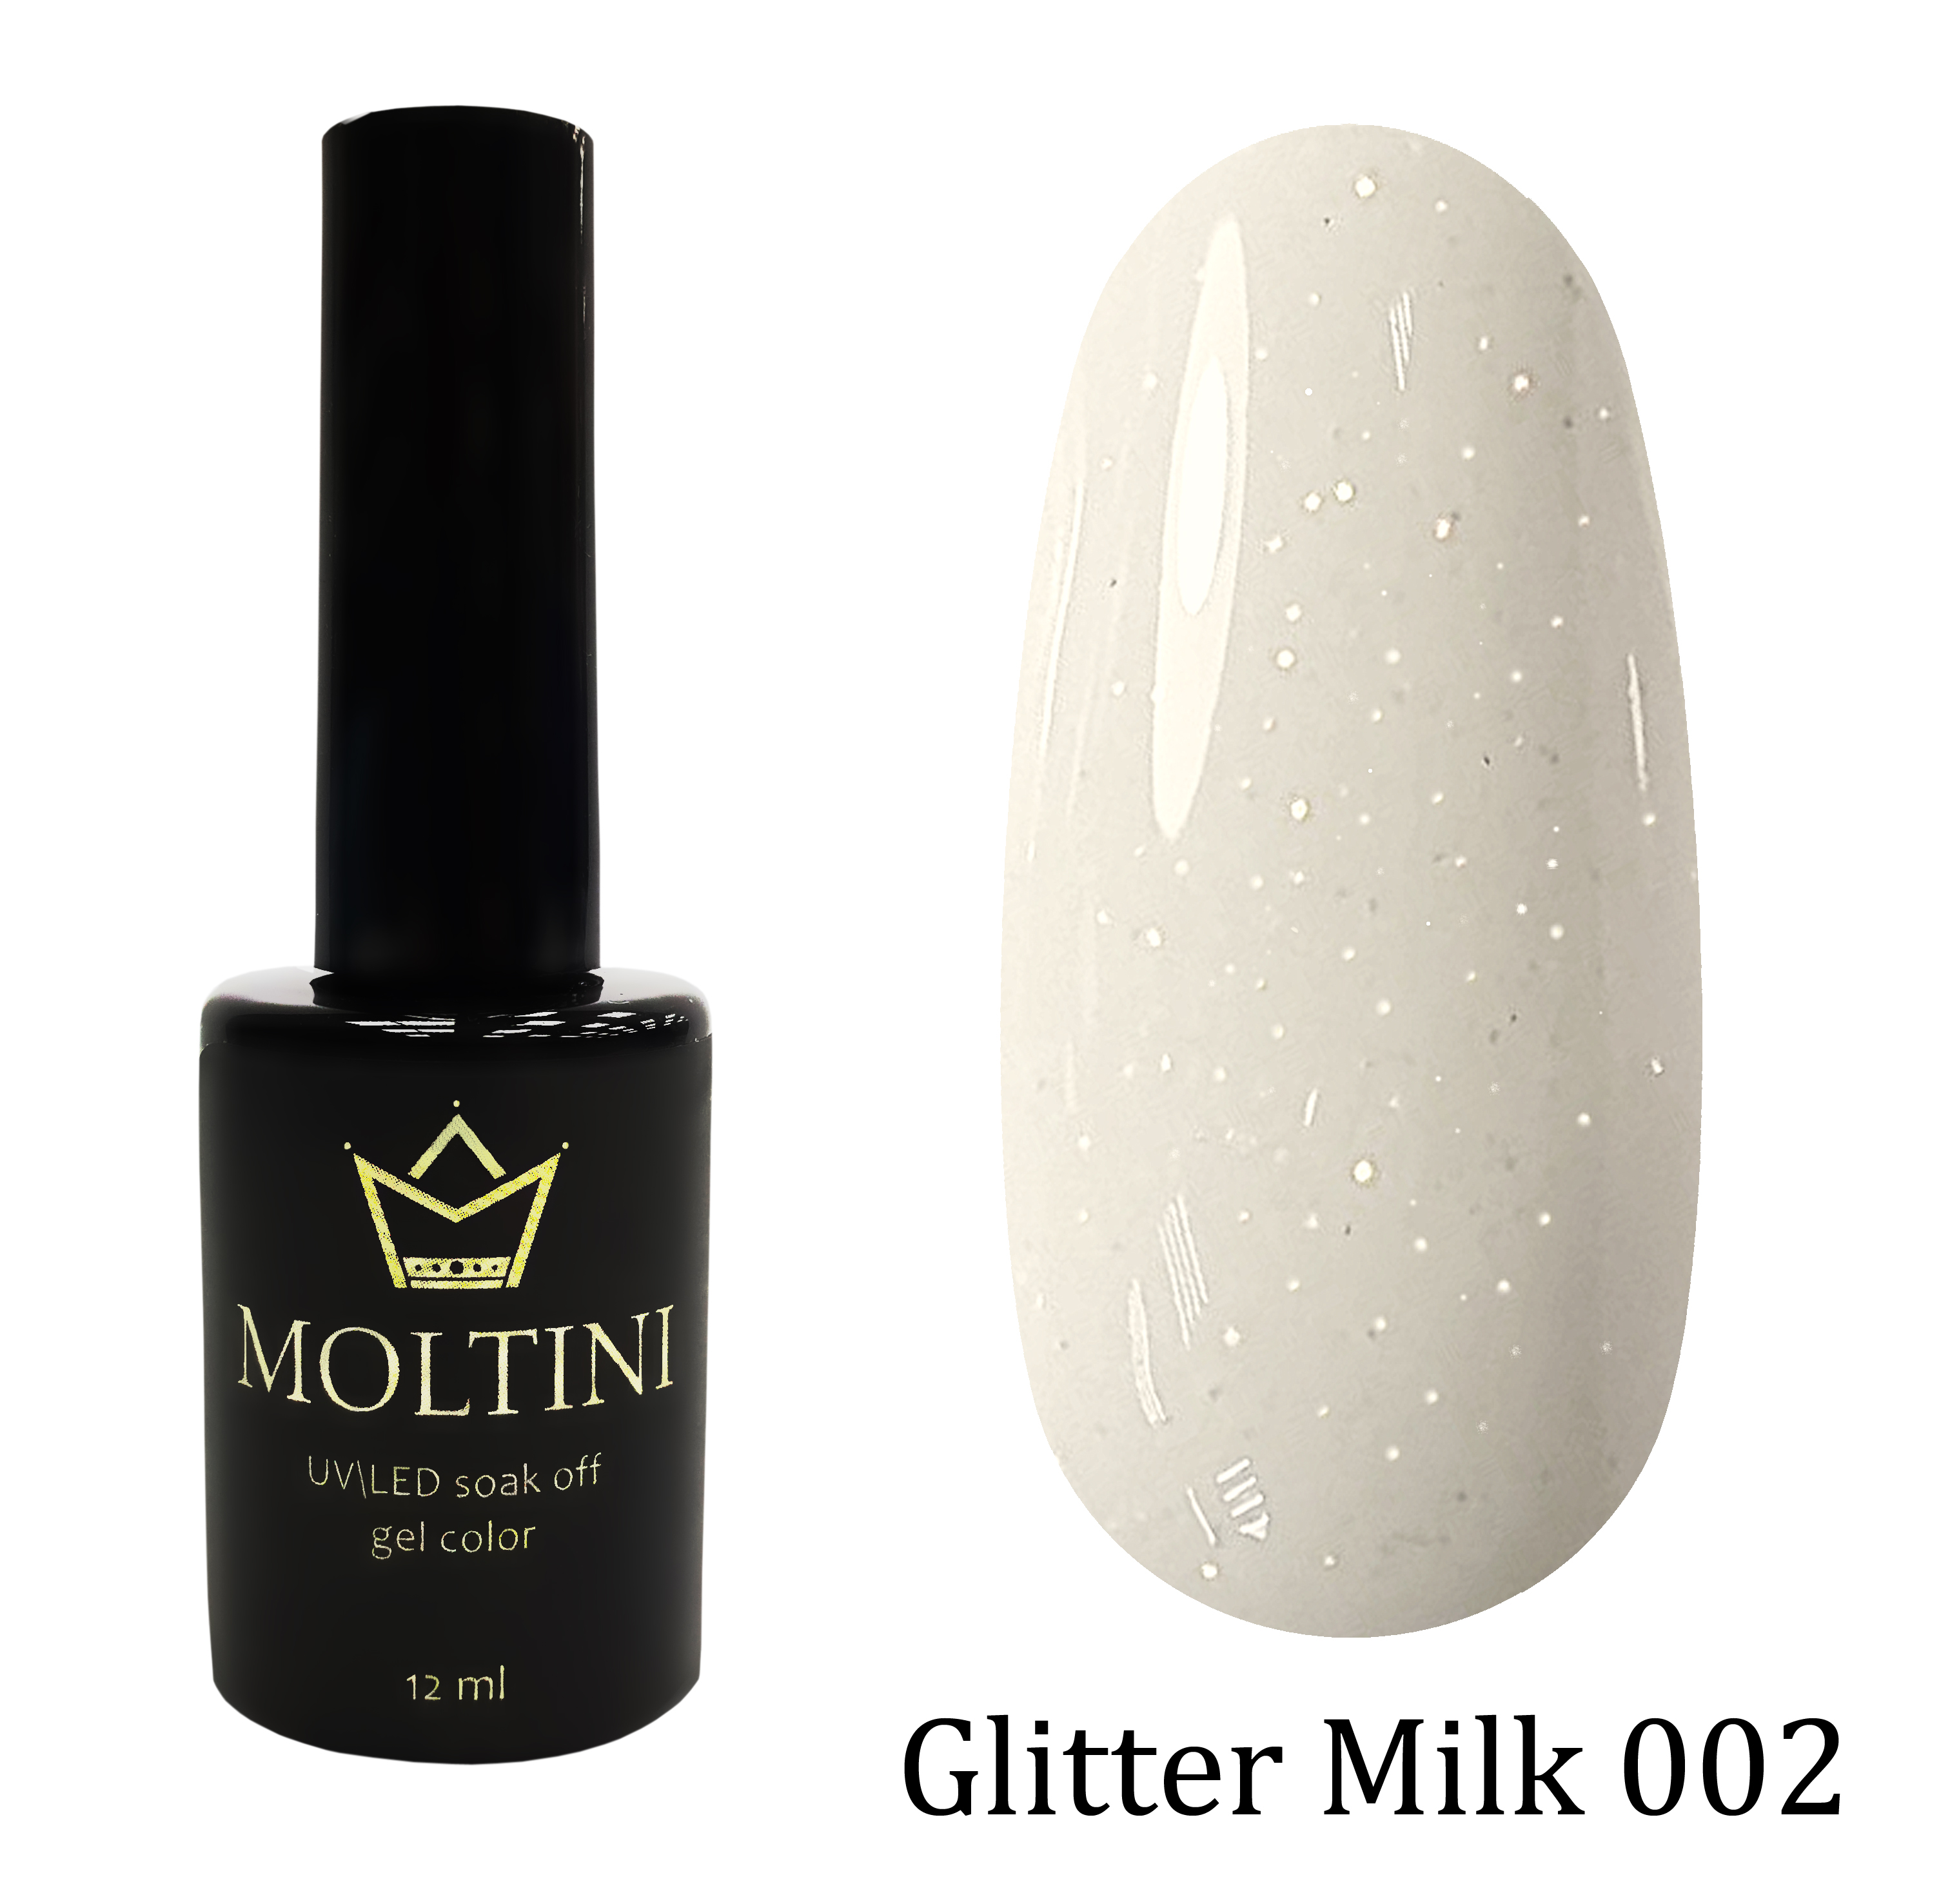 Moltini цветной гель-лак Glitter Milk 002, 12 мл